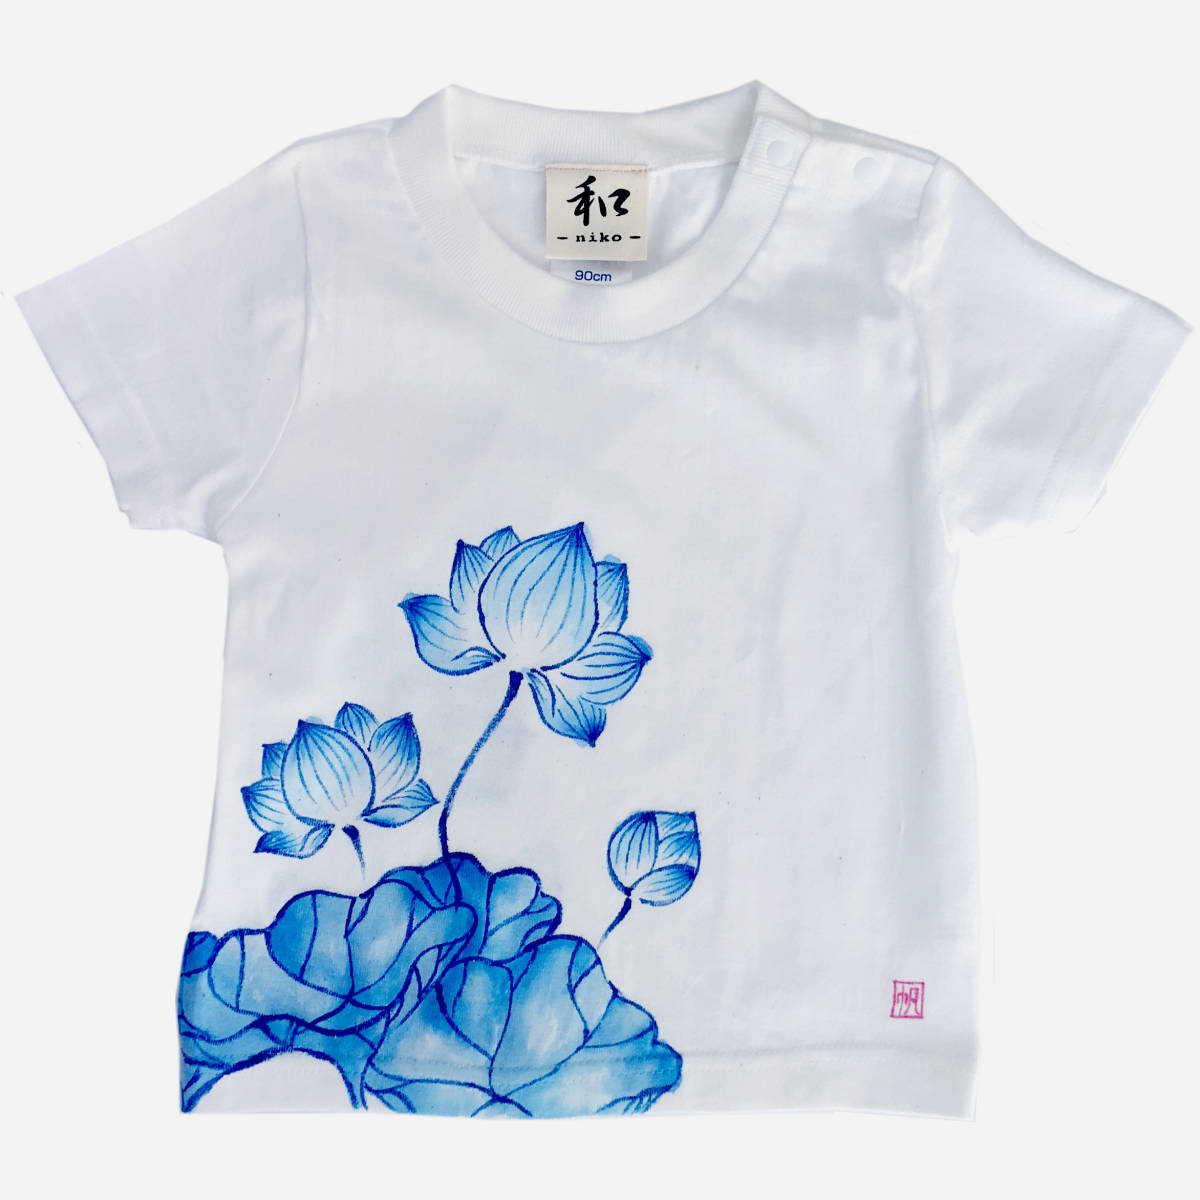  Kids T-shirt 150 size white lotus pattern T-shirt hand ...... lotus. floral print T-shirt short sleeves peace pattern Japanese style retro hand made 